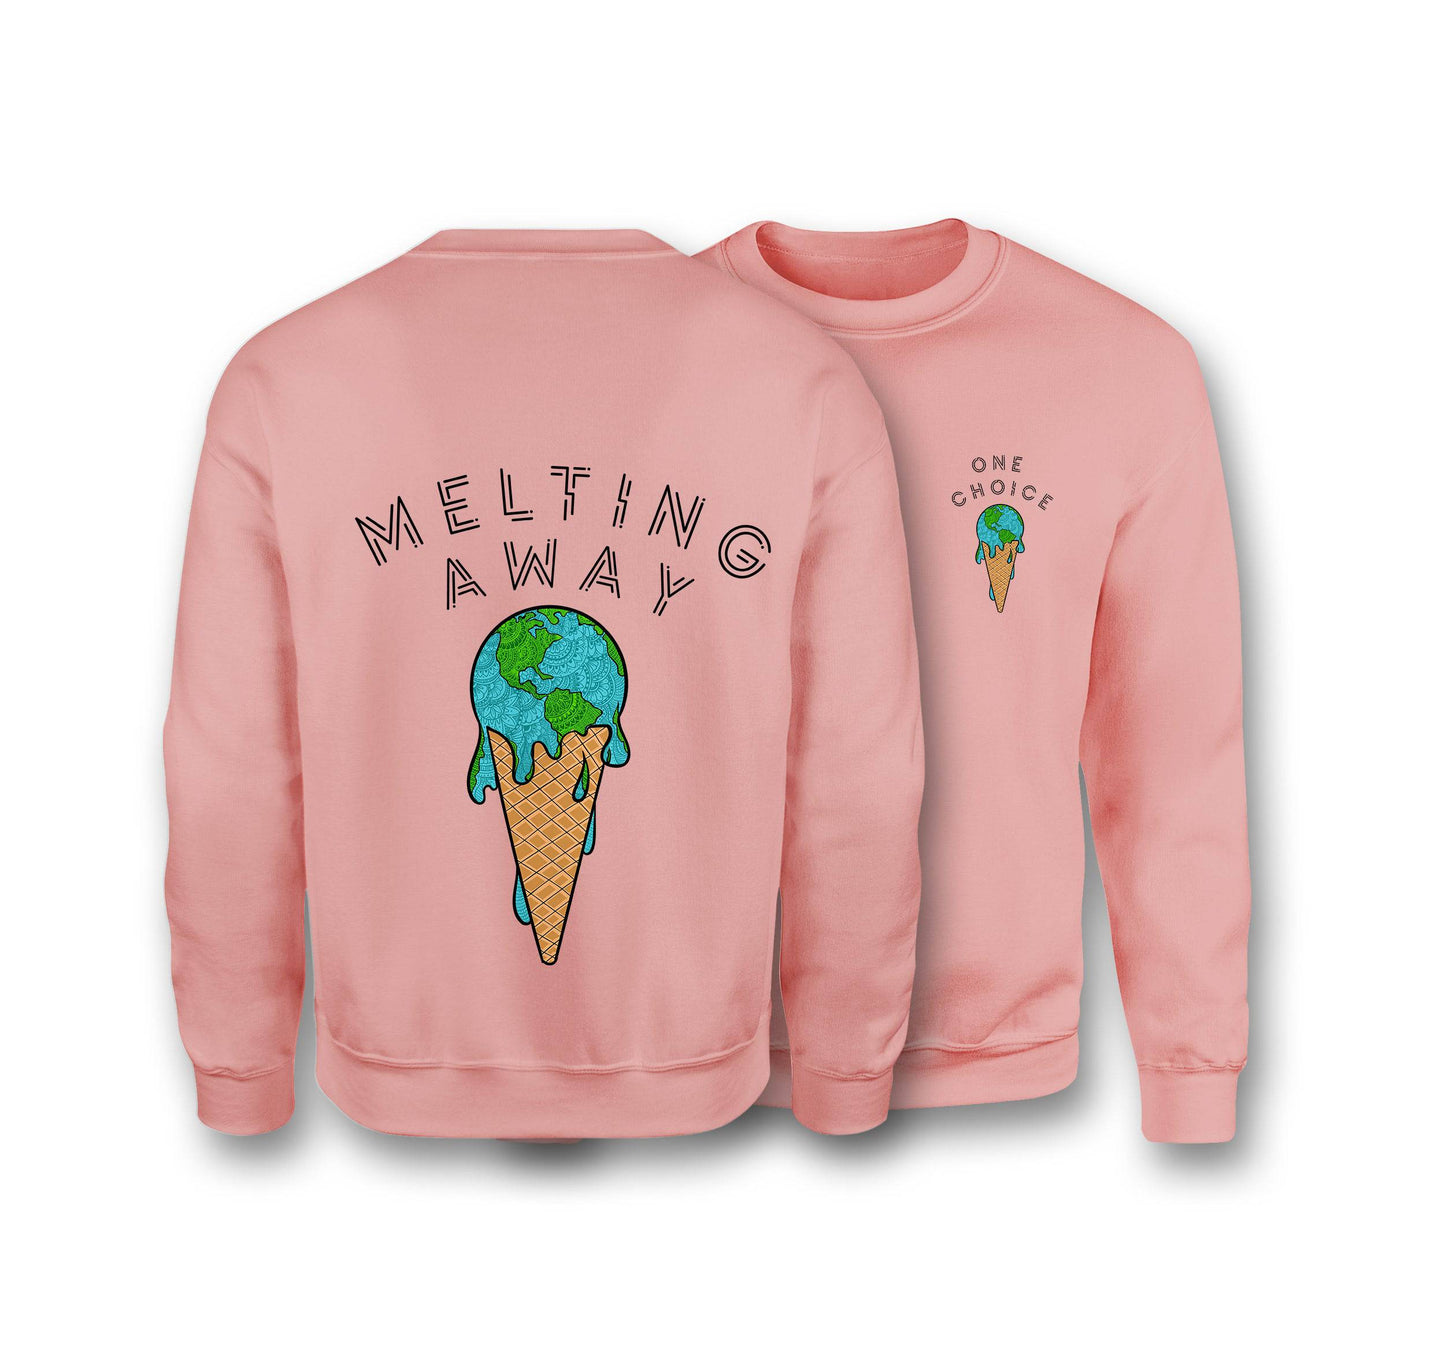 Melting Away Sweatshirt - Organic Cotton Sweatshirt - One Choice Apparel